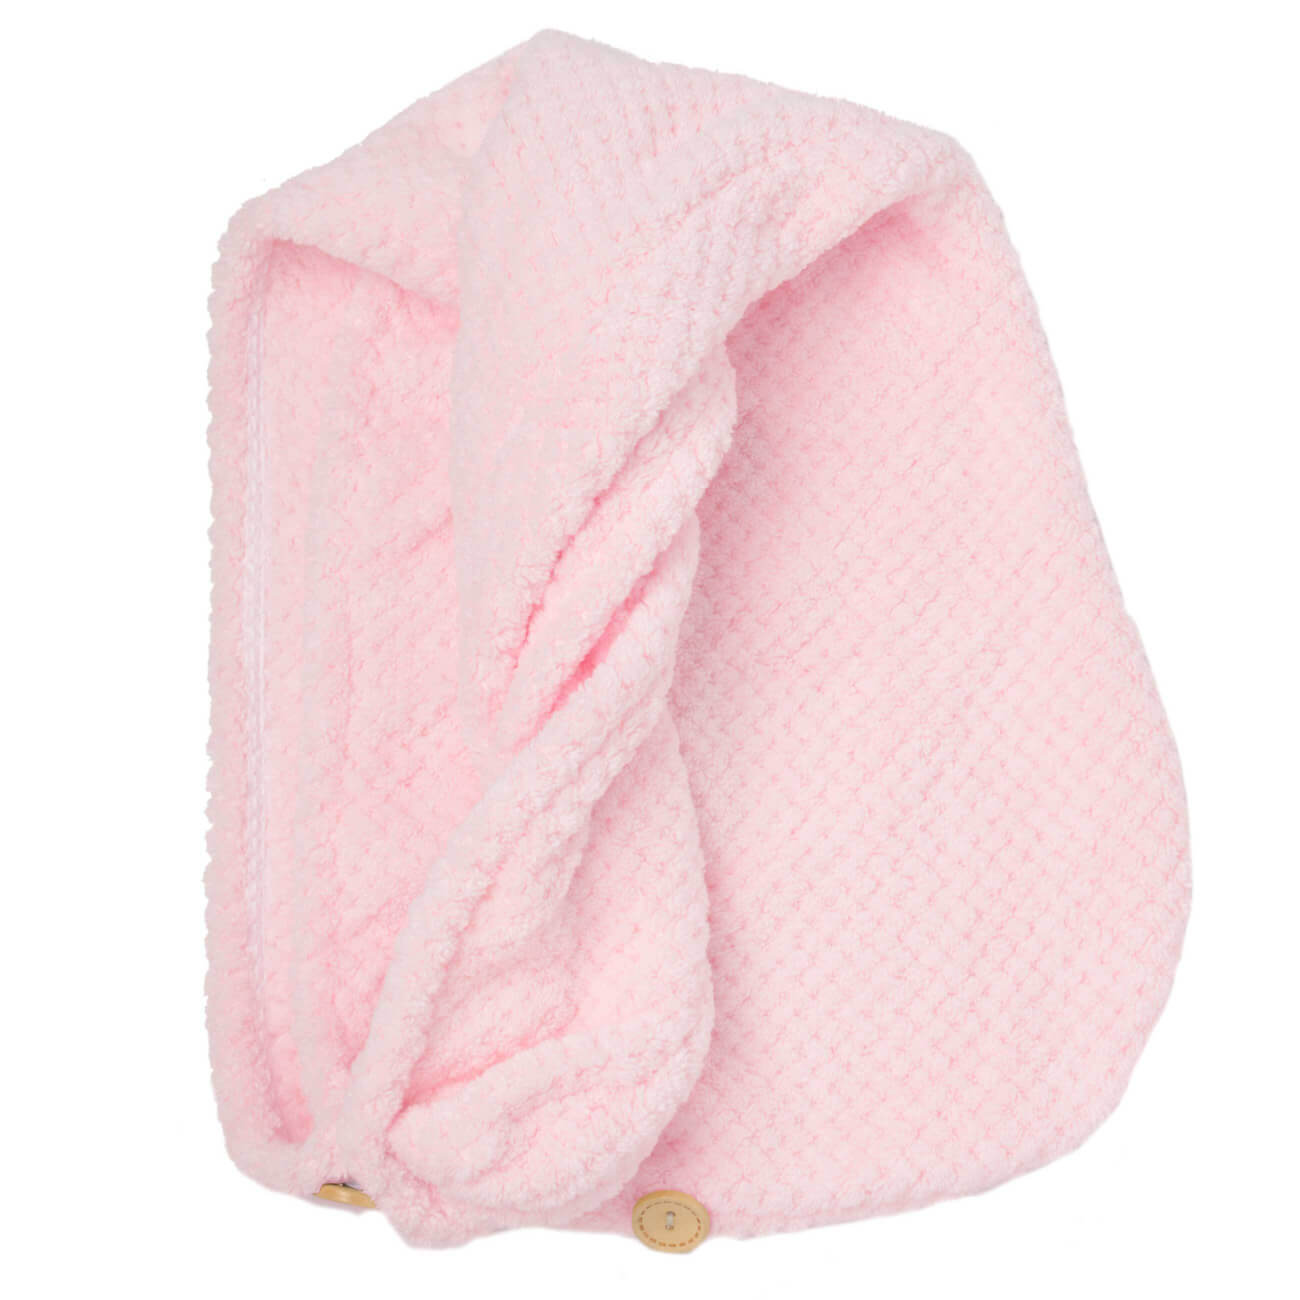 Полотенце-тюрбан для волос, 62х24 см, микроволокно, розовое, Fiber spa полотенце xiaomi zsh national series 72 34 розовое